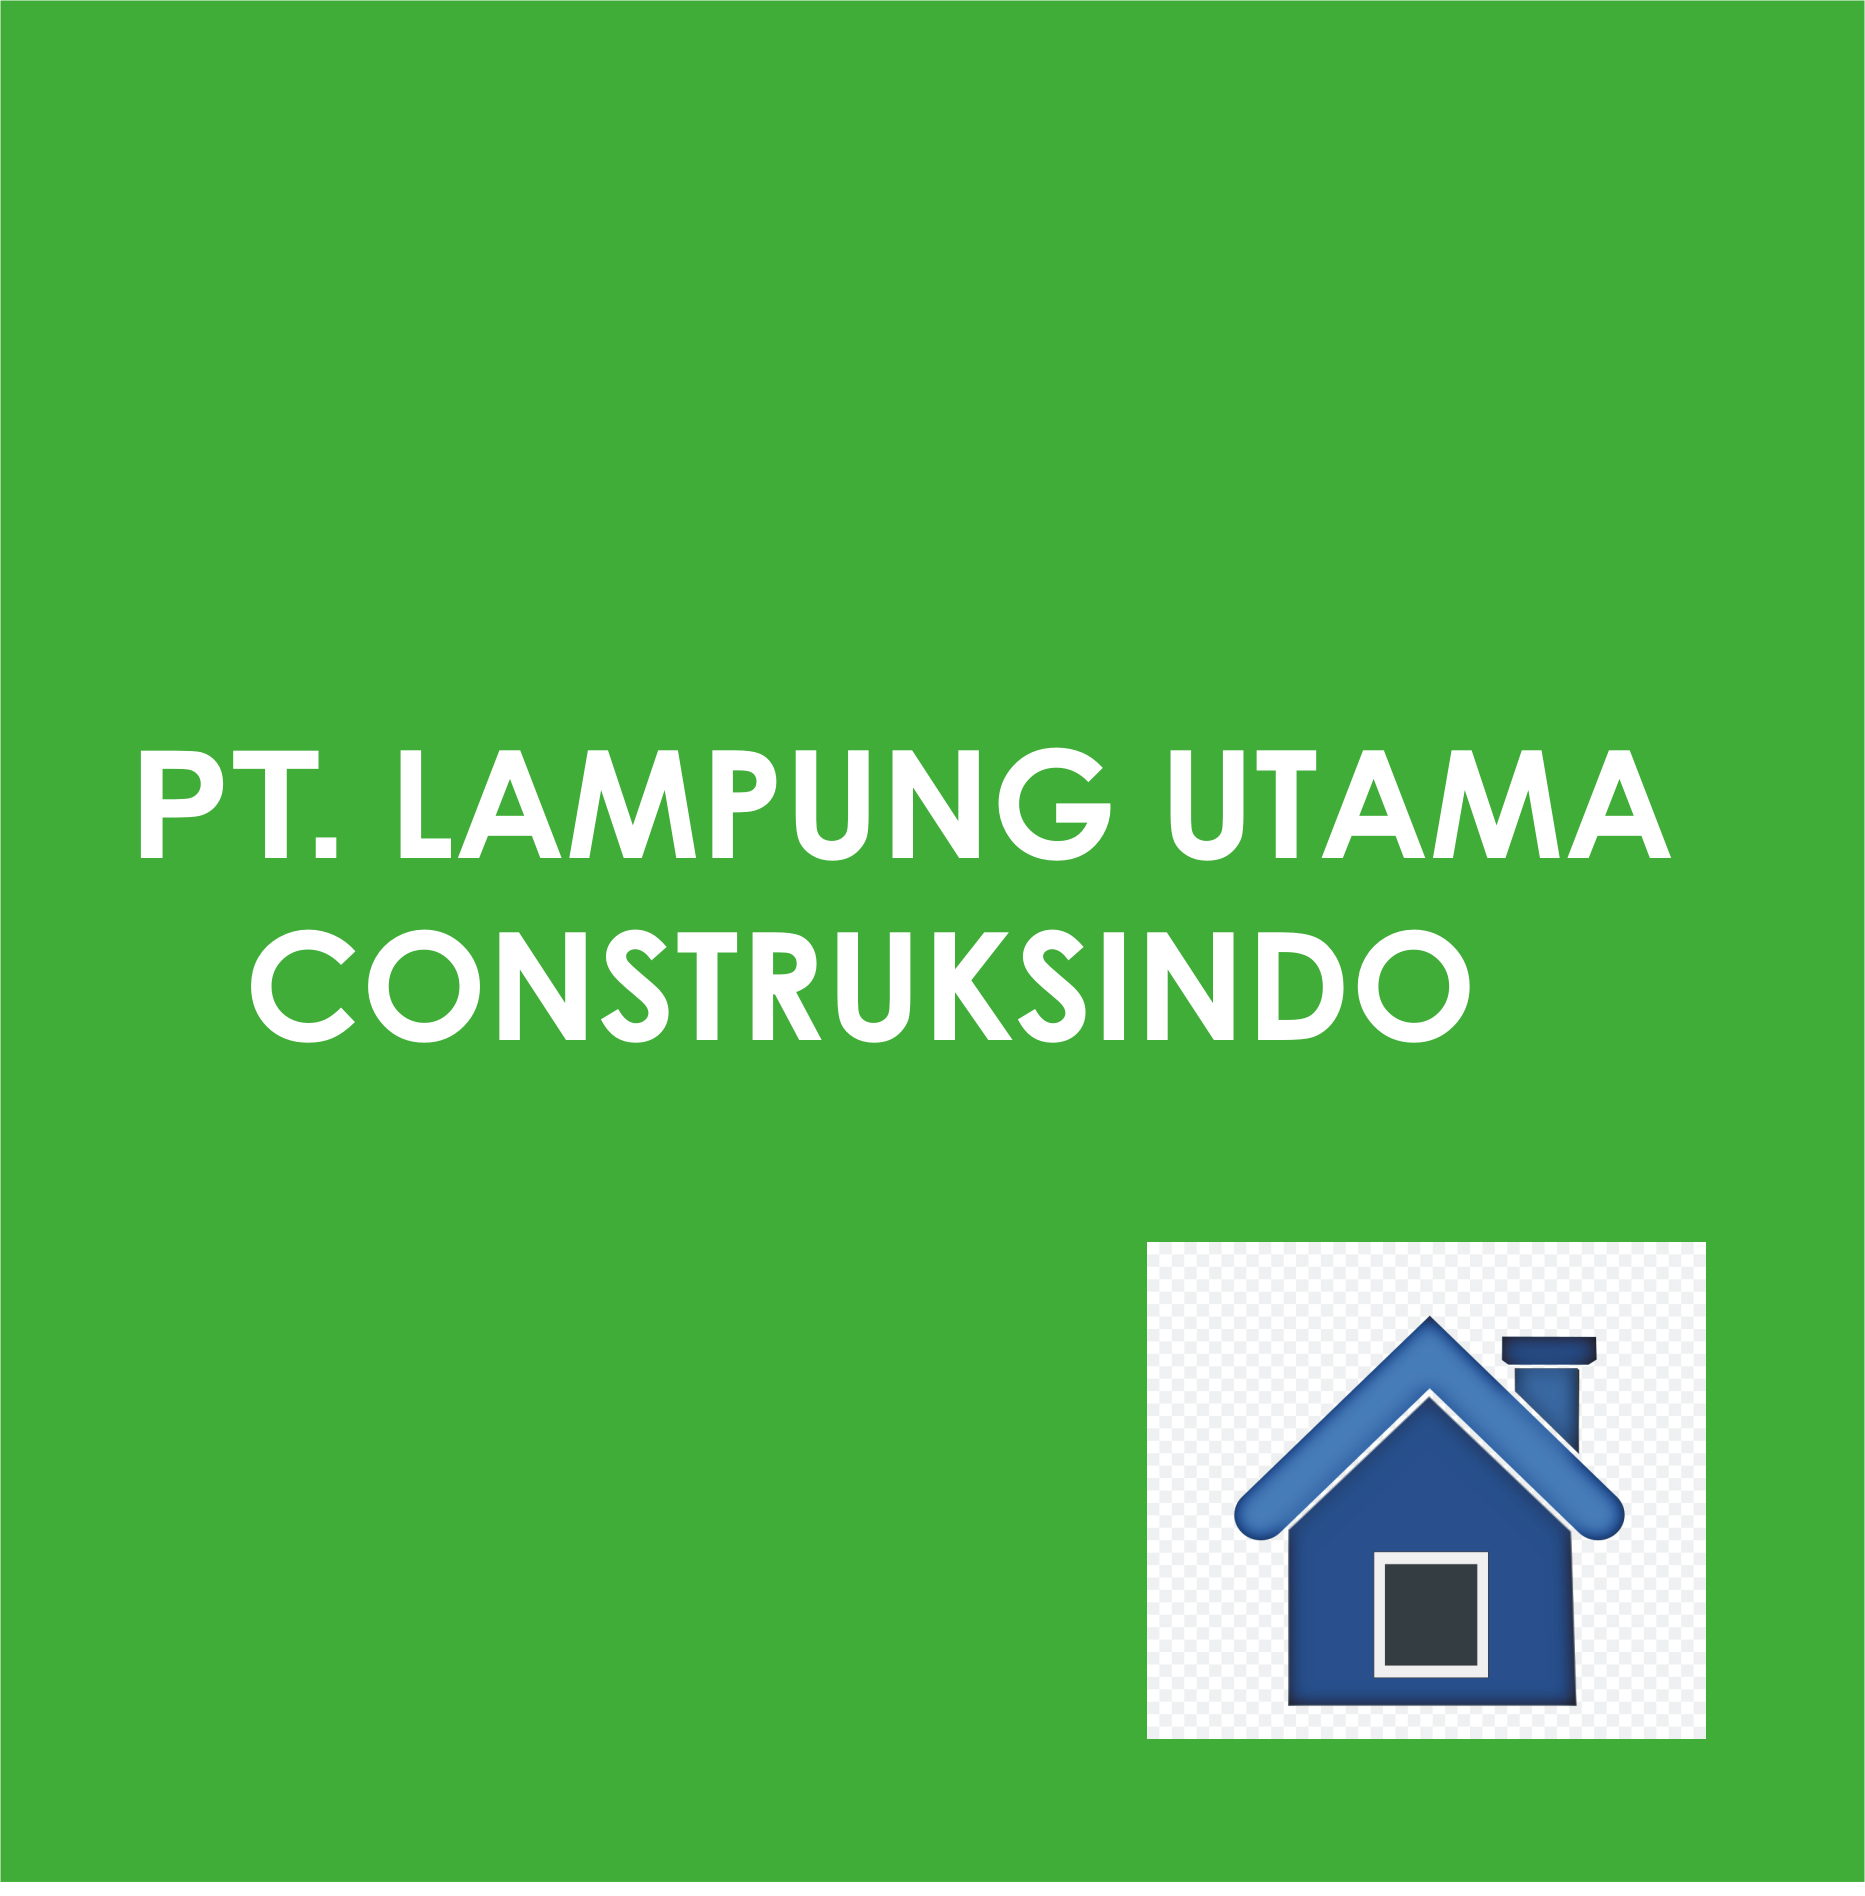 PT. LAMPUNG UTAMA CONSTRUKSINDO